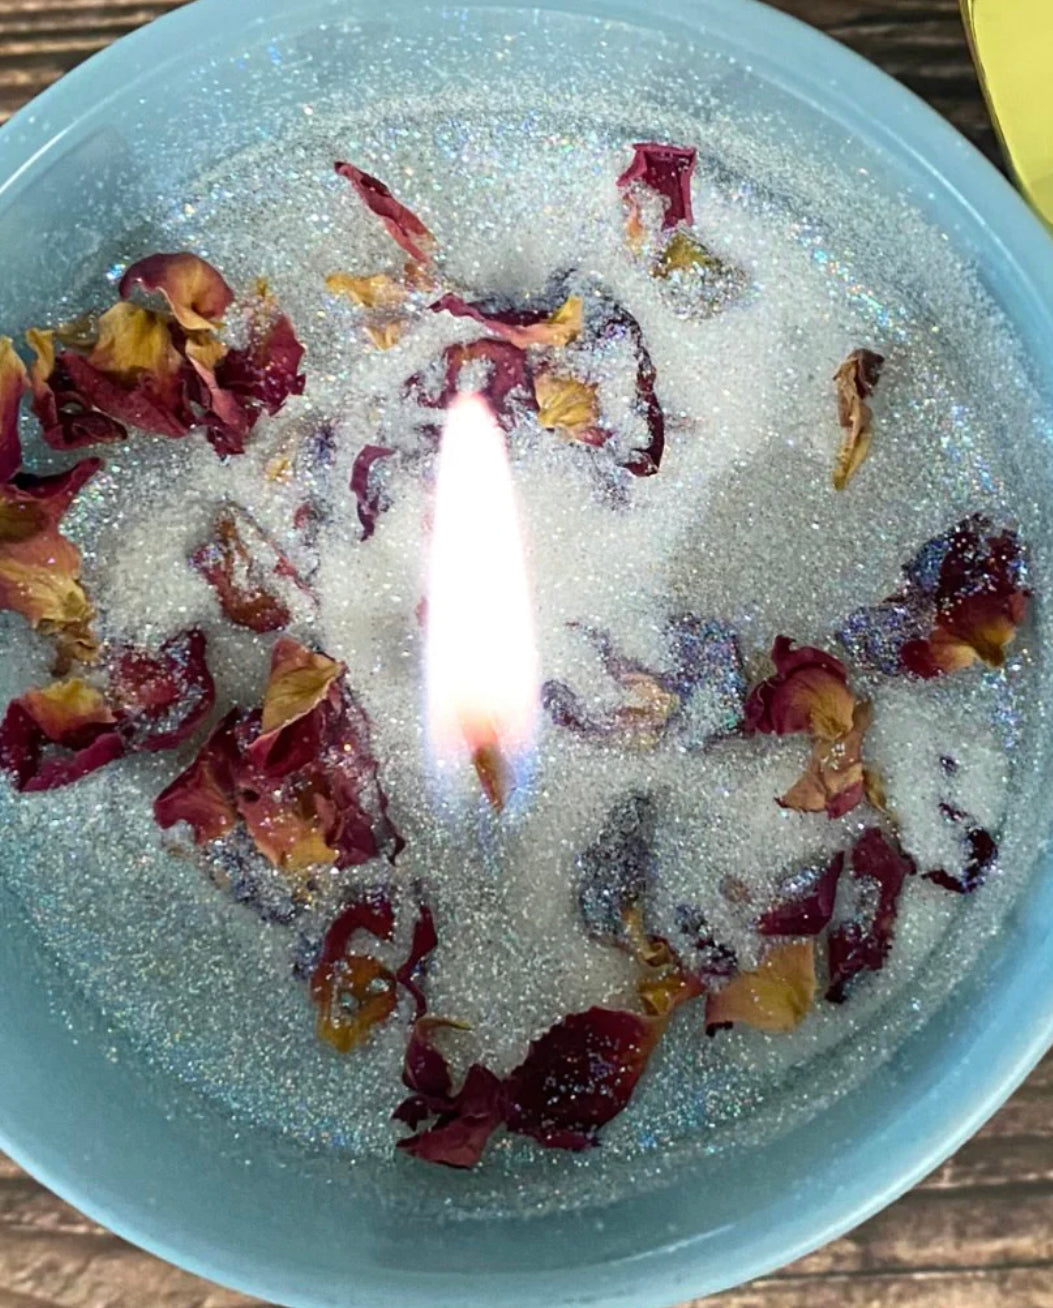 Satin's Magickal Fixed Candle: Purpose